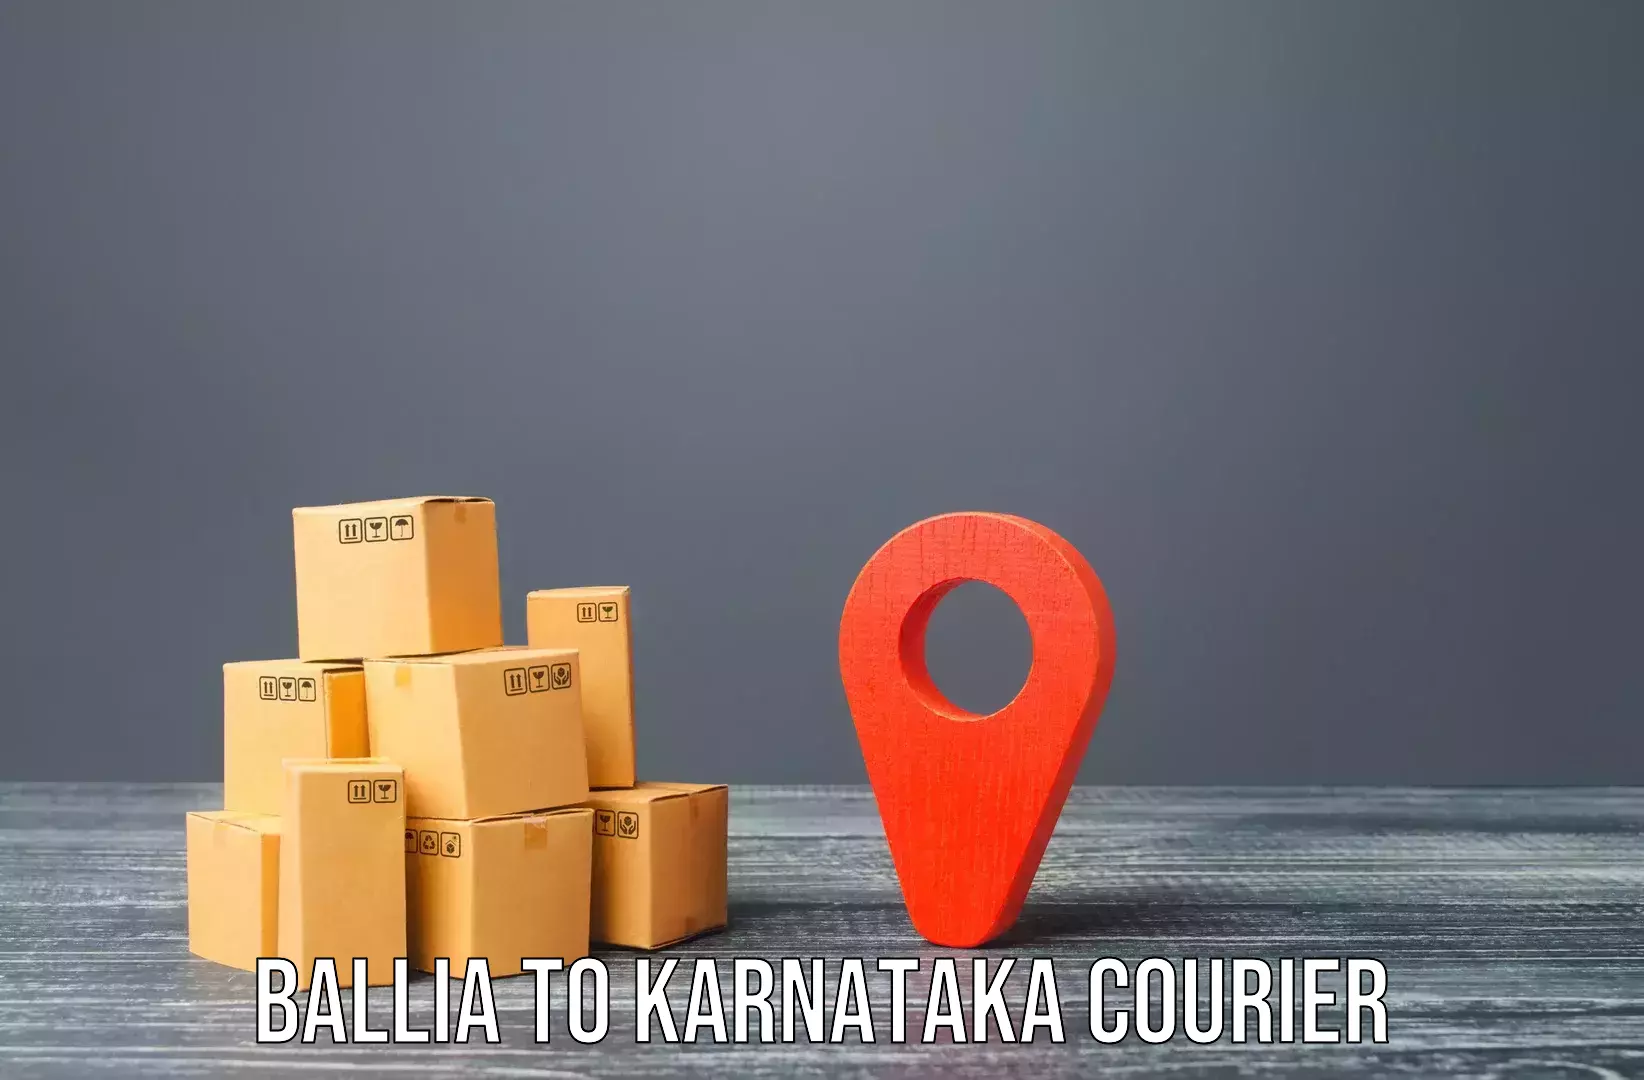 Furniture relocation experts Ballia to Karnataka